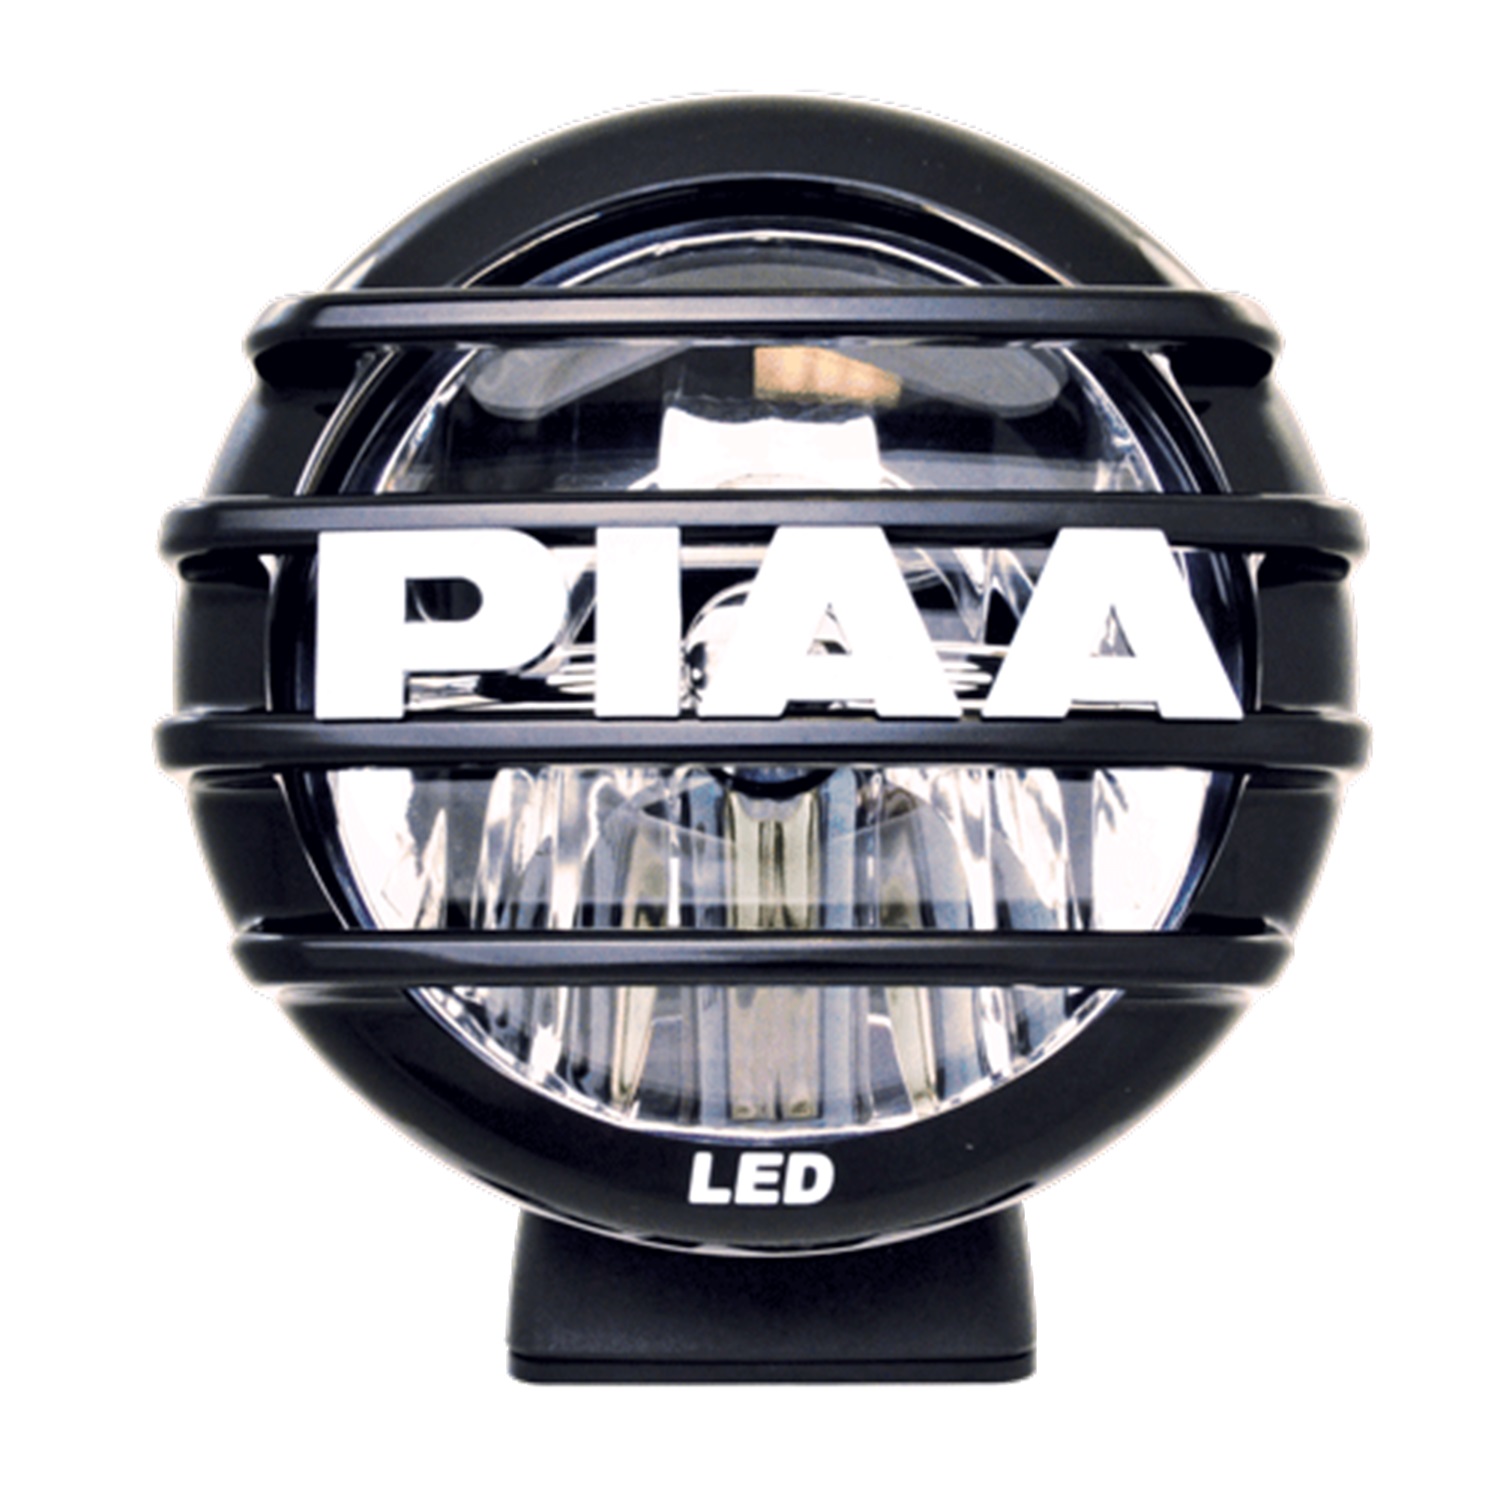 PIAA PIAA 73562 LED Driving Lamp Kit